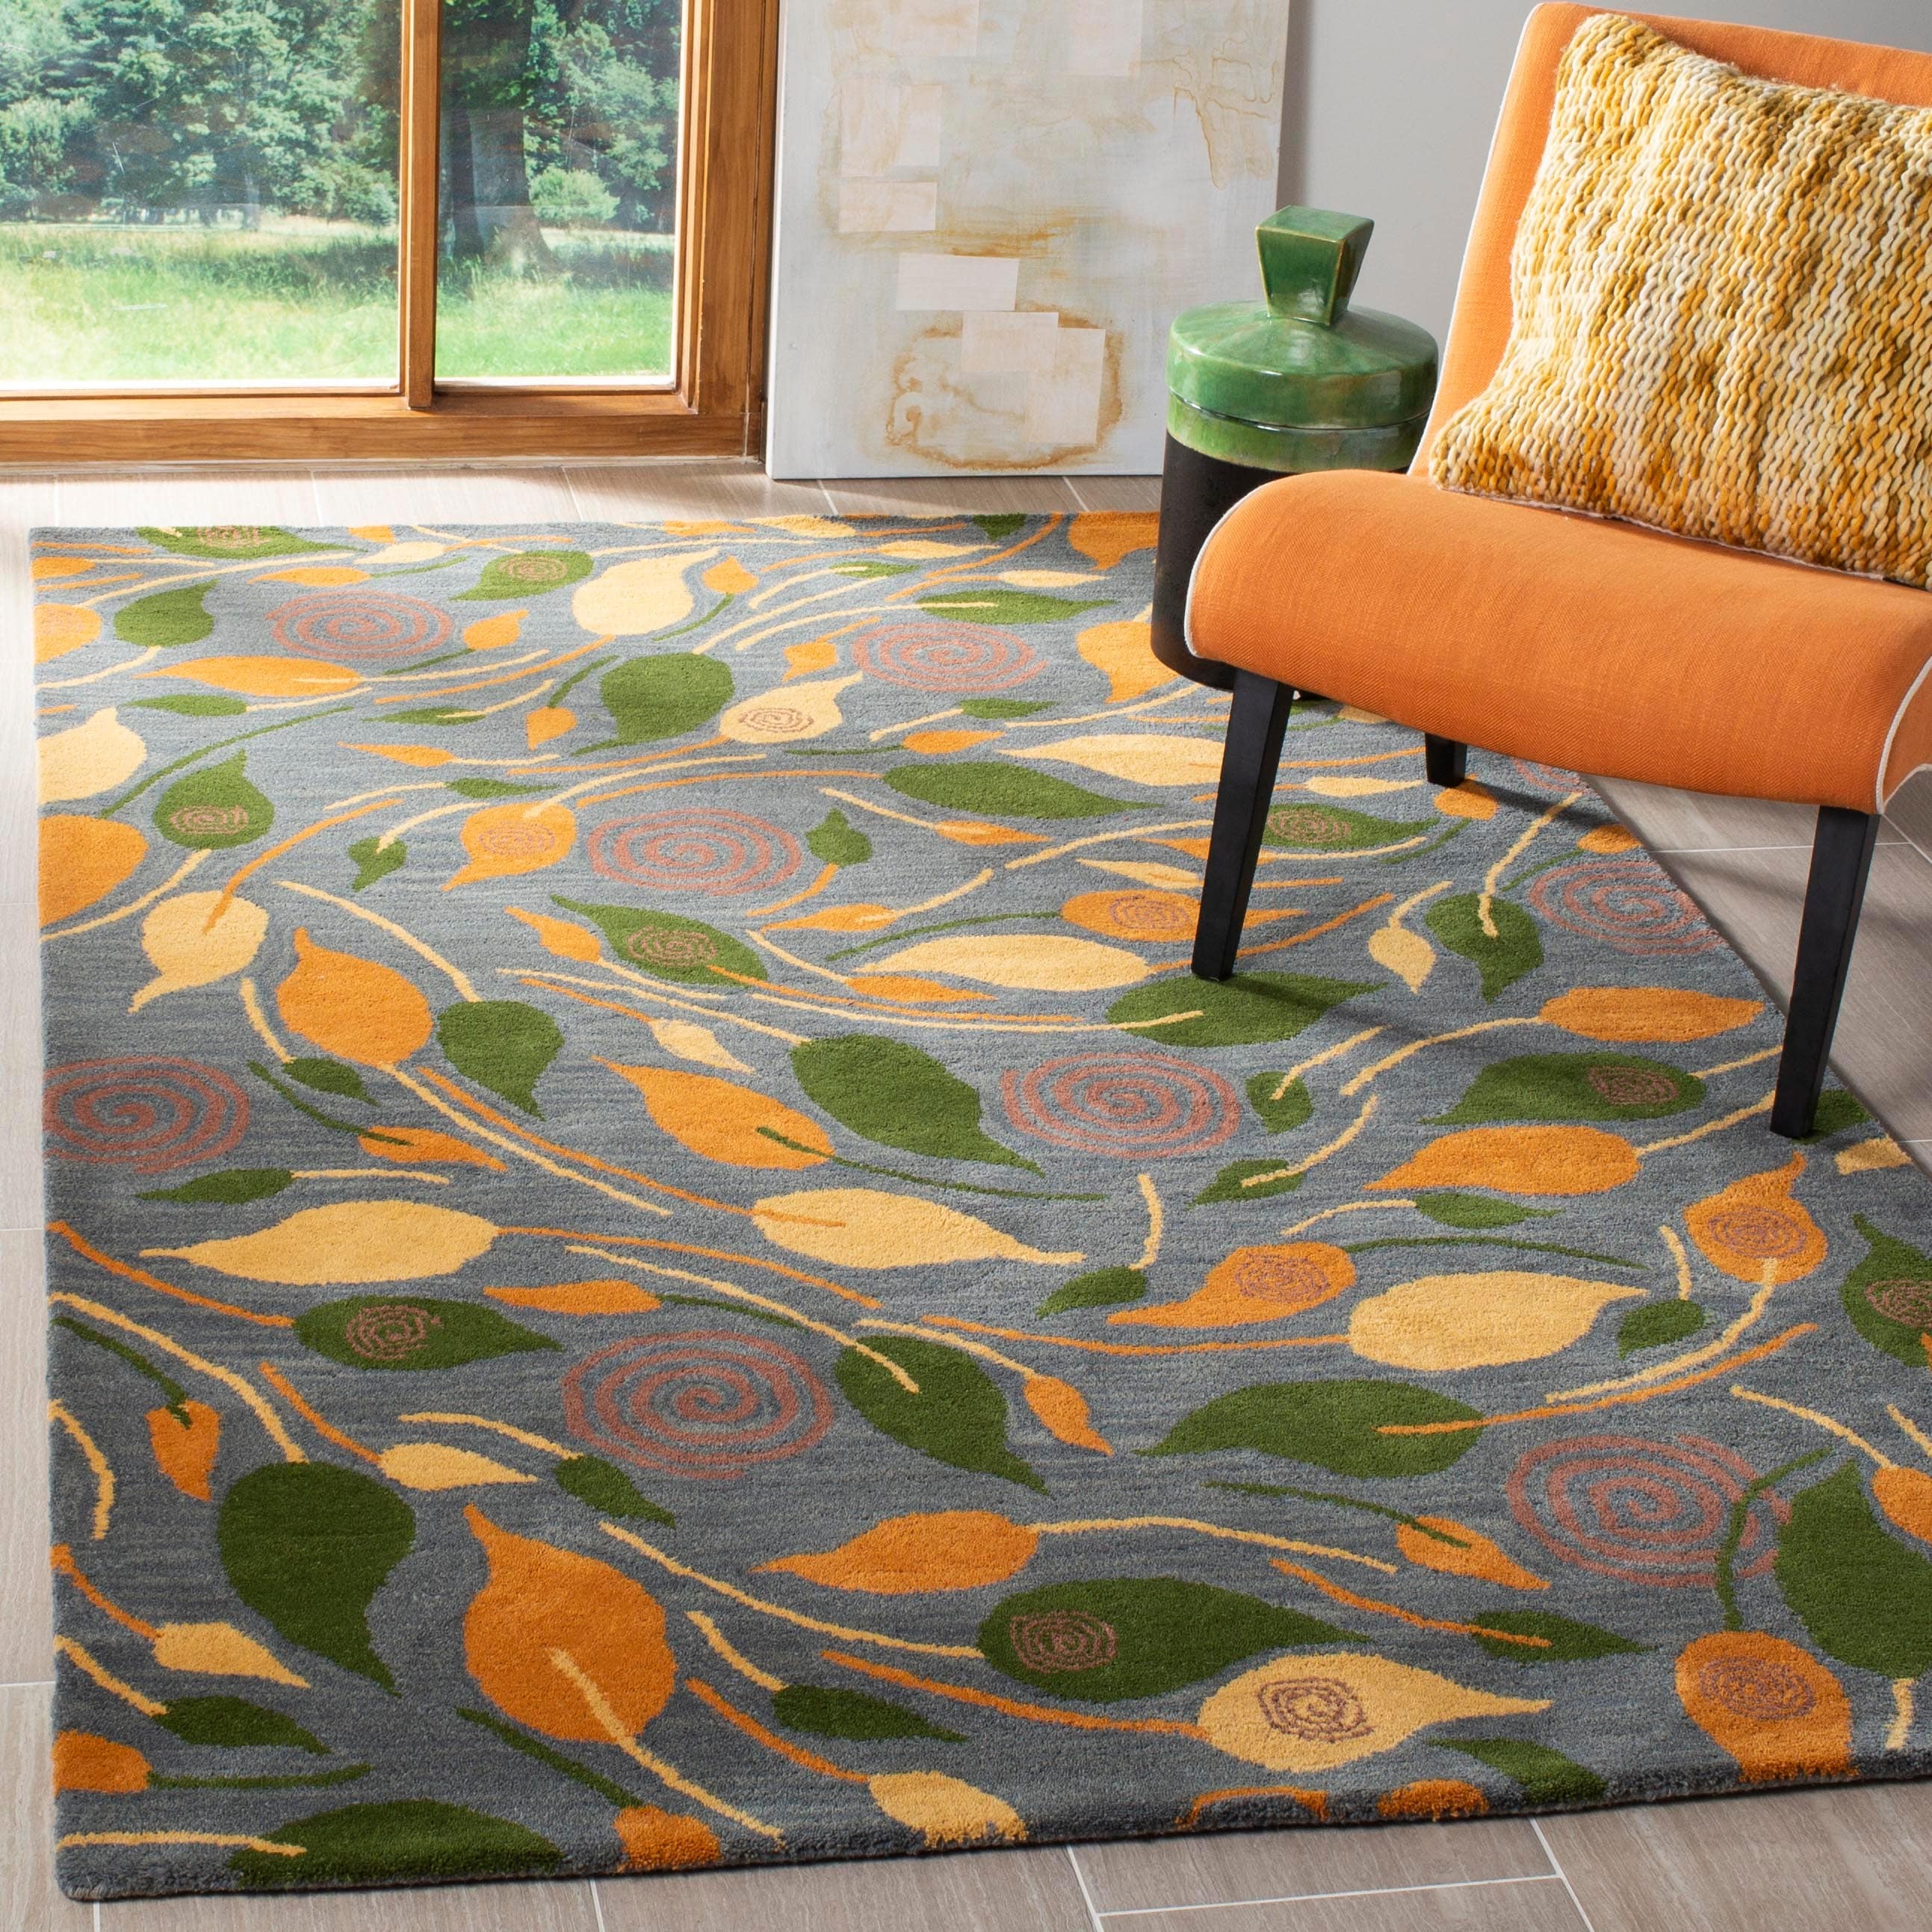 NZ-Wool Charcoal Colour Floor Rug Border Hand-Made Modern Rug Carpet *NEW* 